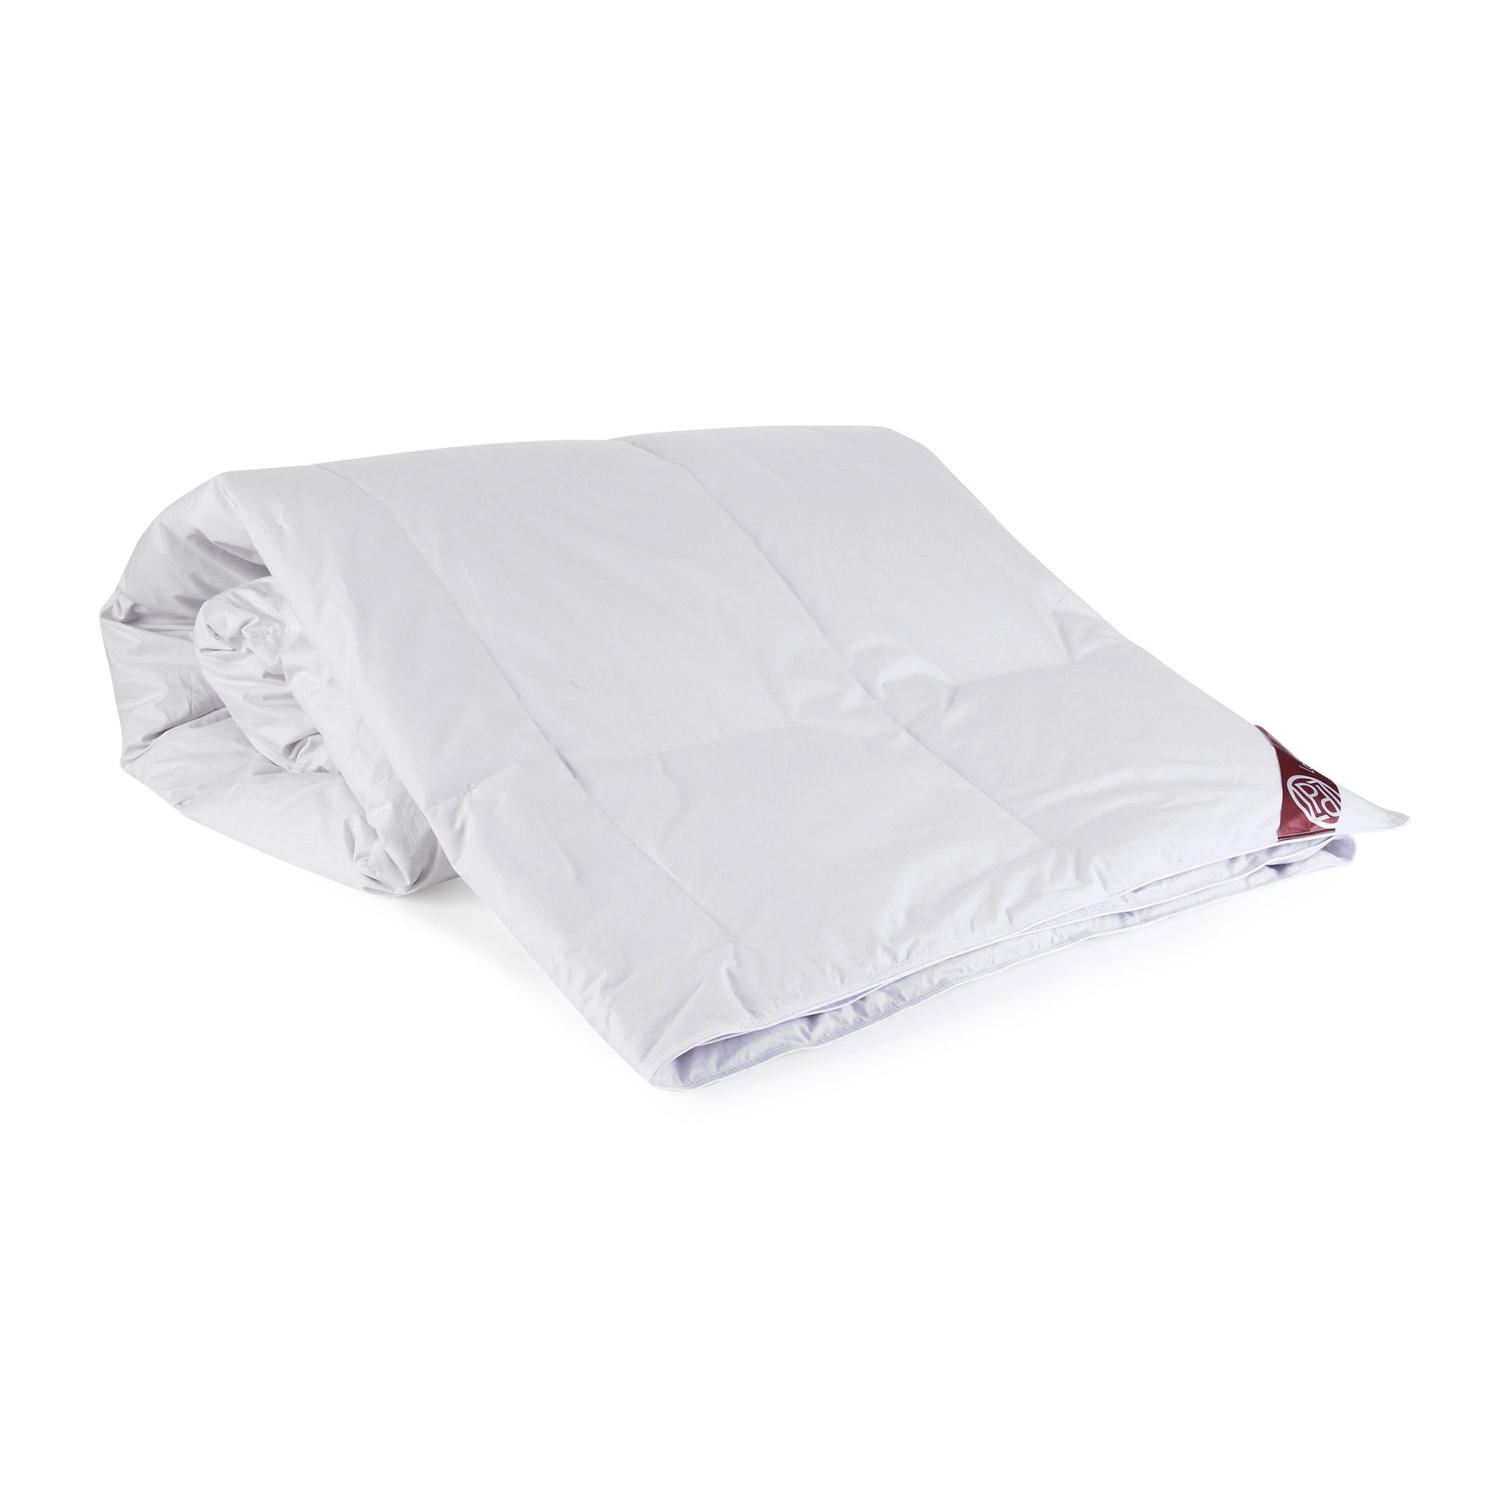 Пуховое одеяло Louis Pascal Камилла белое 200х220 см (ЛП2034) пуховое одеяло louis pascal николь бежевое 140х205 см лп2022